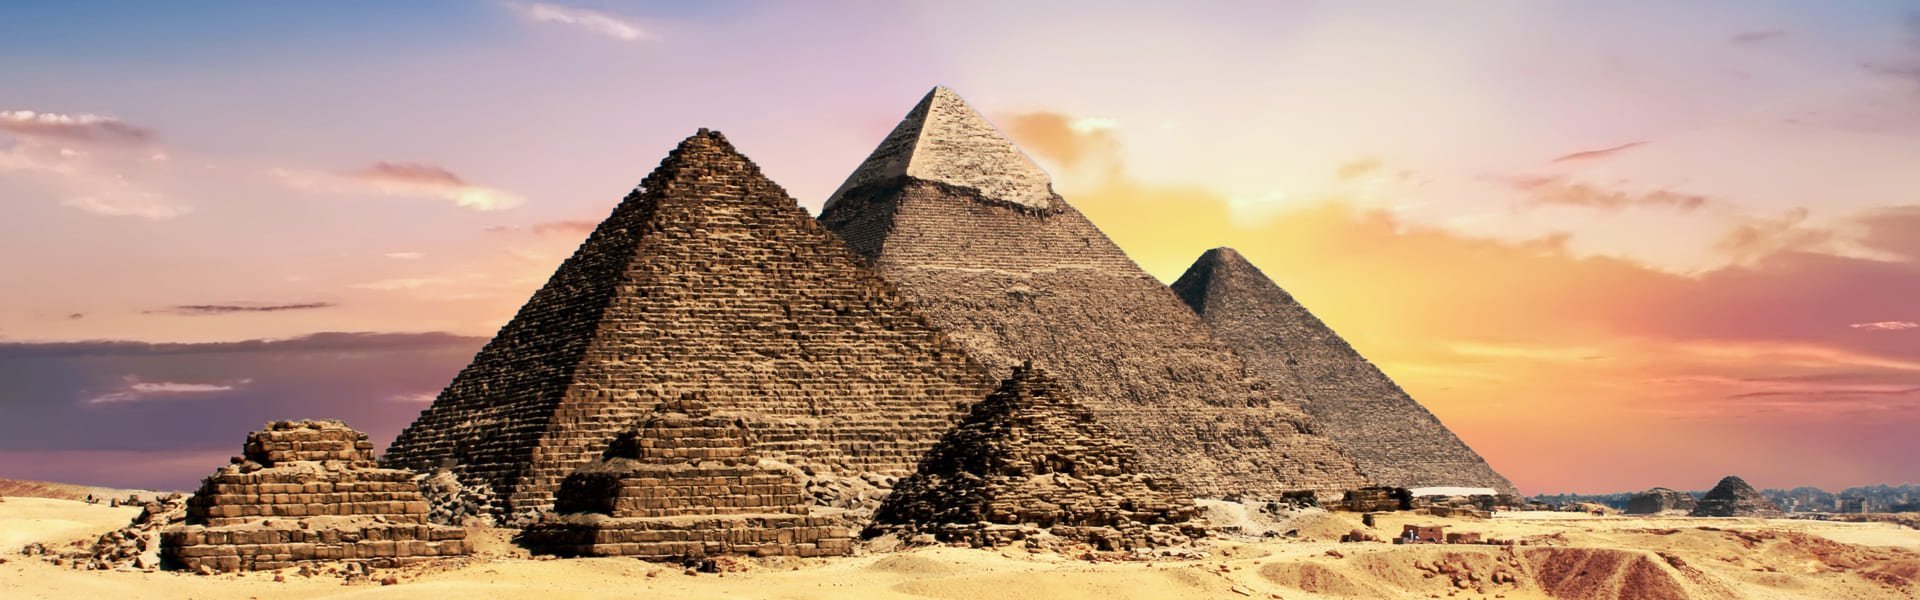 Kamelen en piramides van Gizeh, Egypte